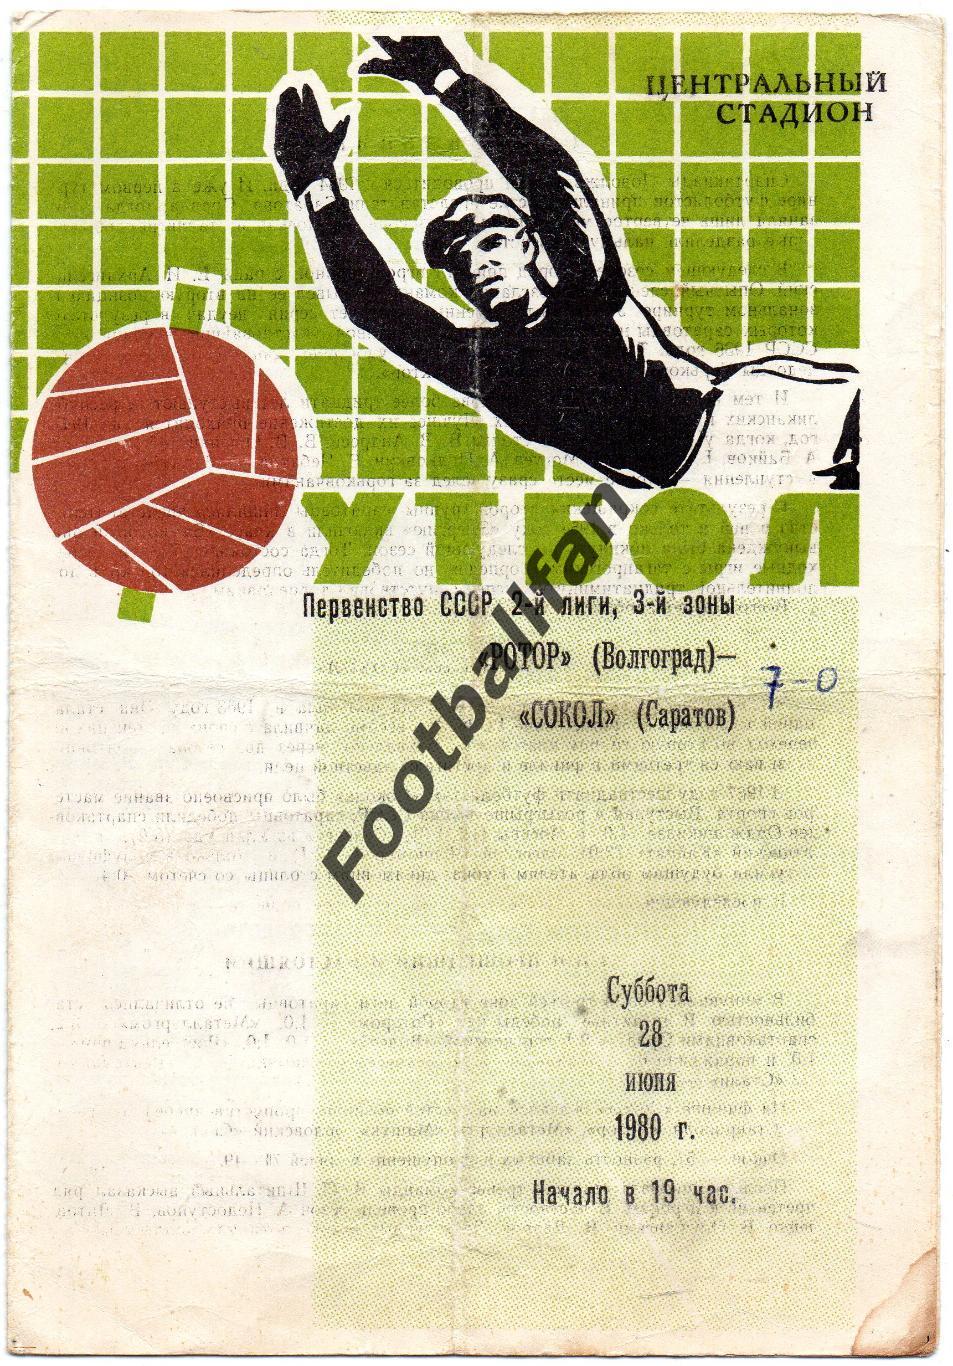 Ротор Волгоград - Сокол Саратов 28.06.1980